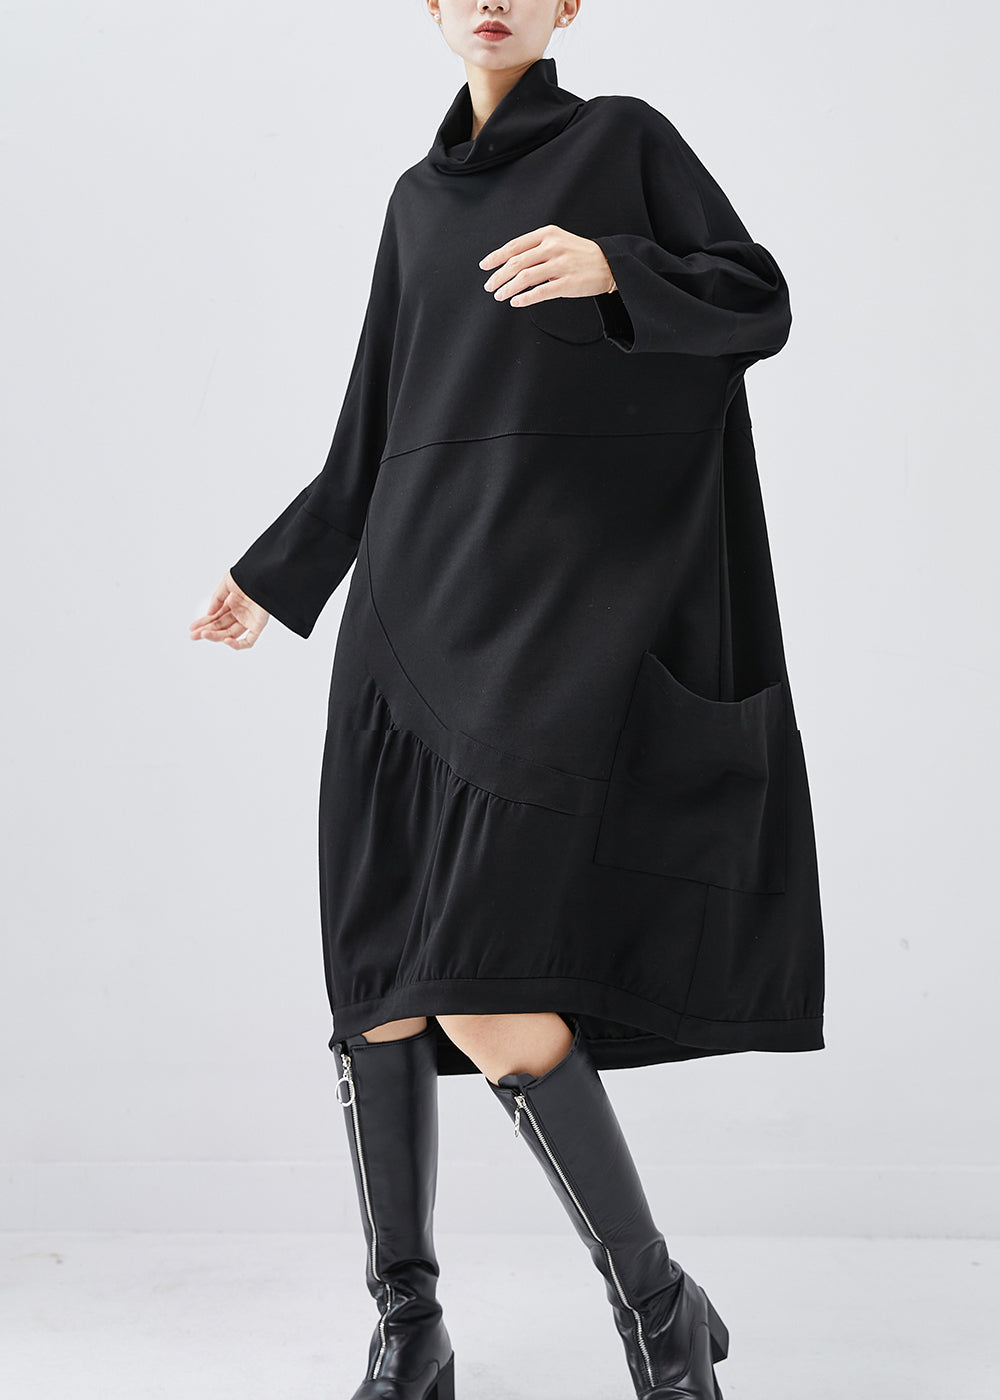 Boutique Black Turtle Neck Patchwork Warm Fleece Dress Winter